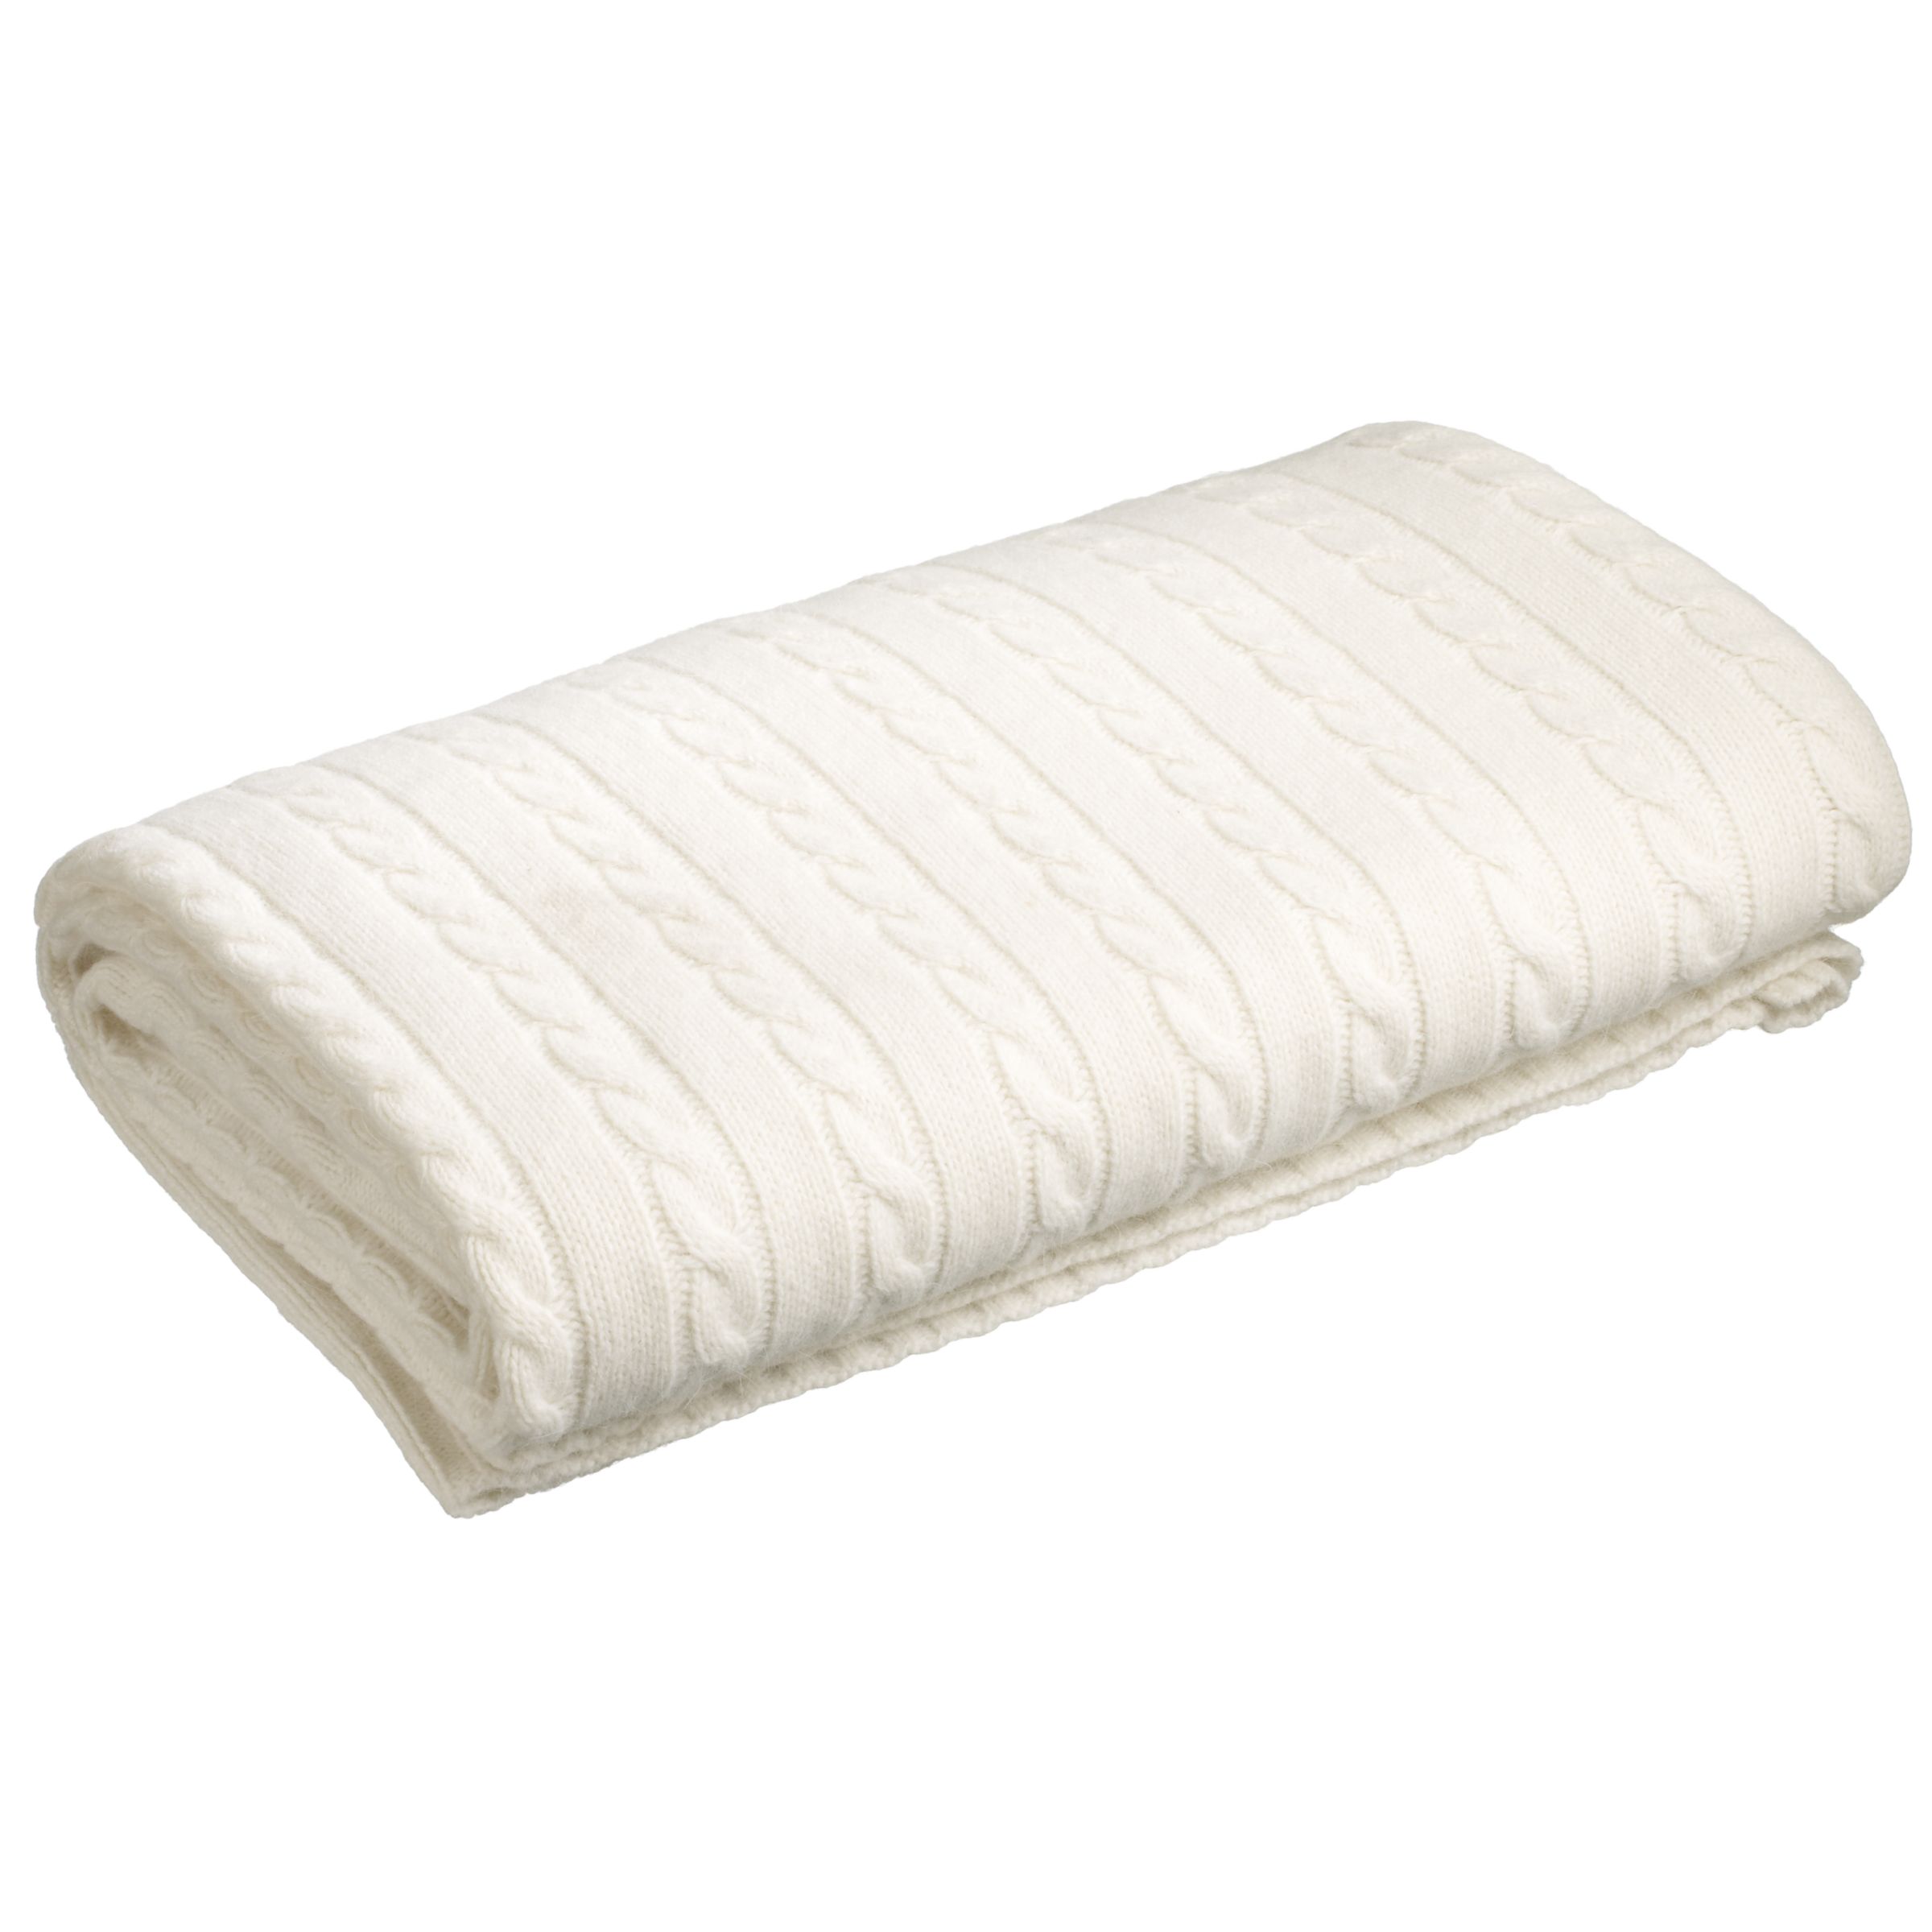 Cableknit Blanket, Cream